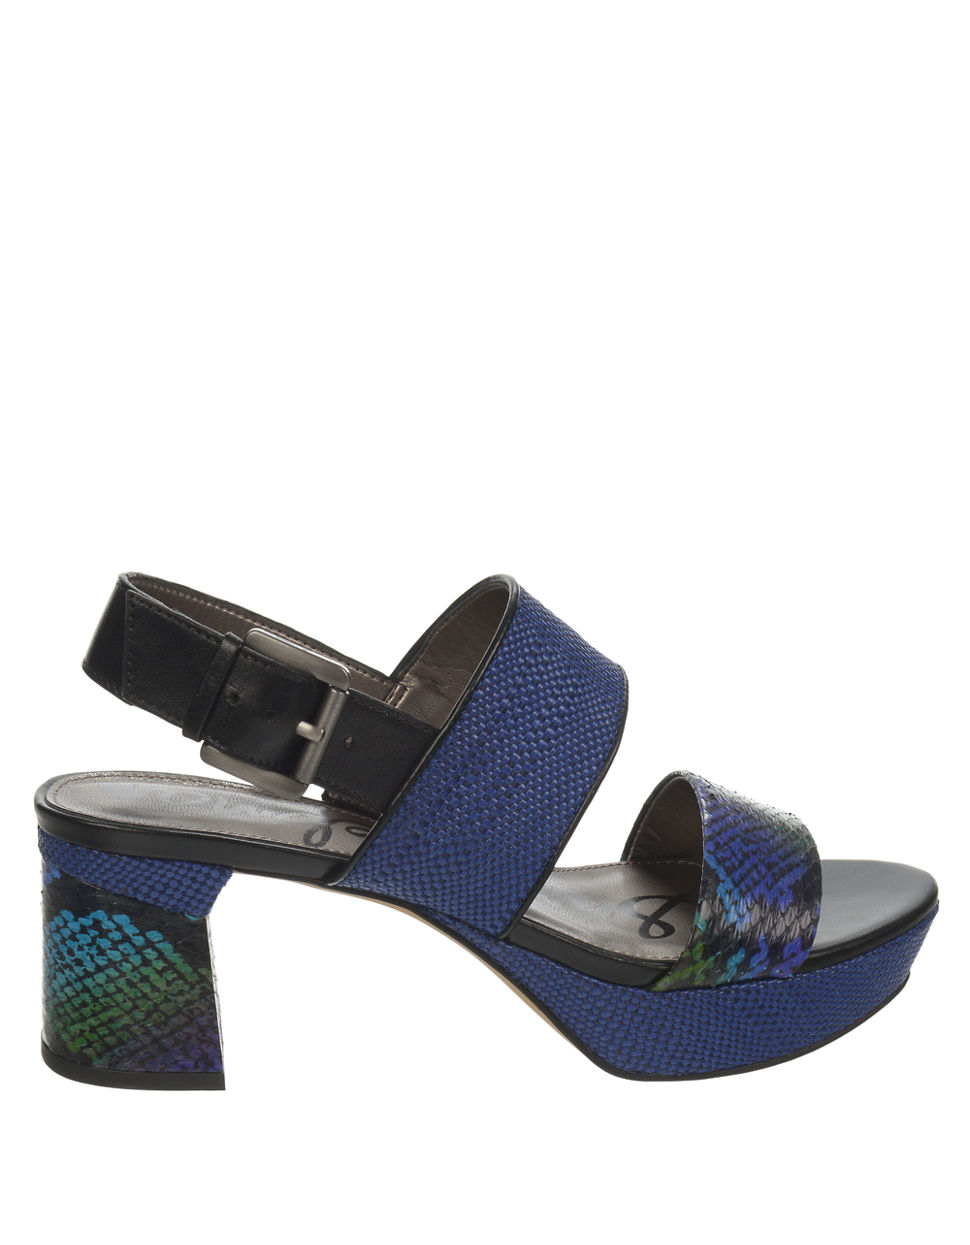 Sam edelman Keira Leather Open-toe Platform Sandals in Blue | Lyst